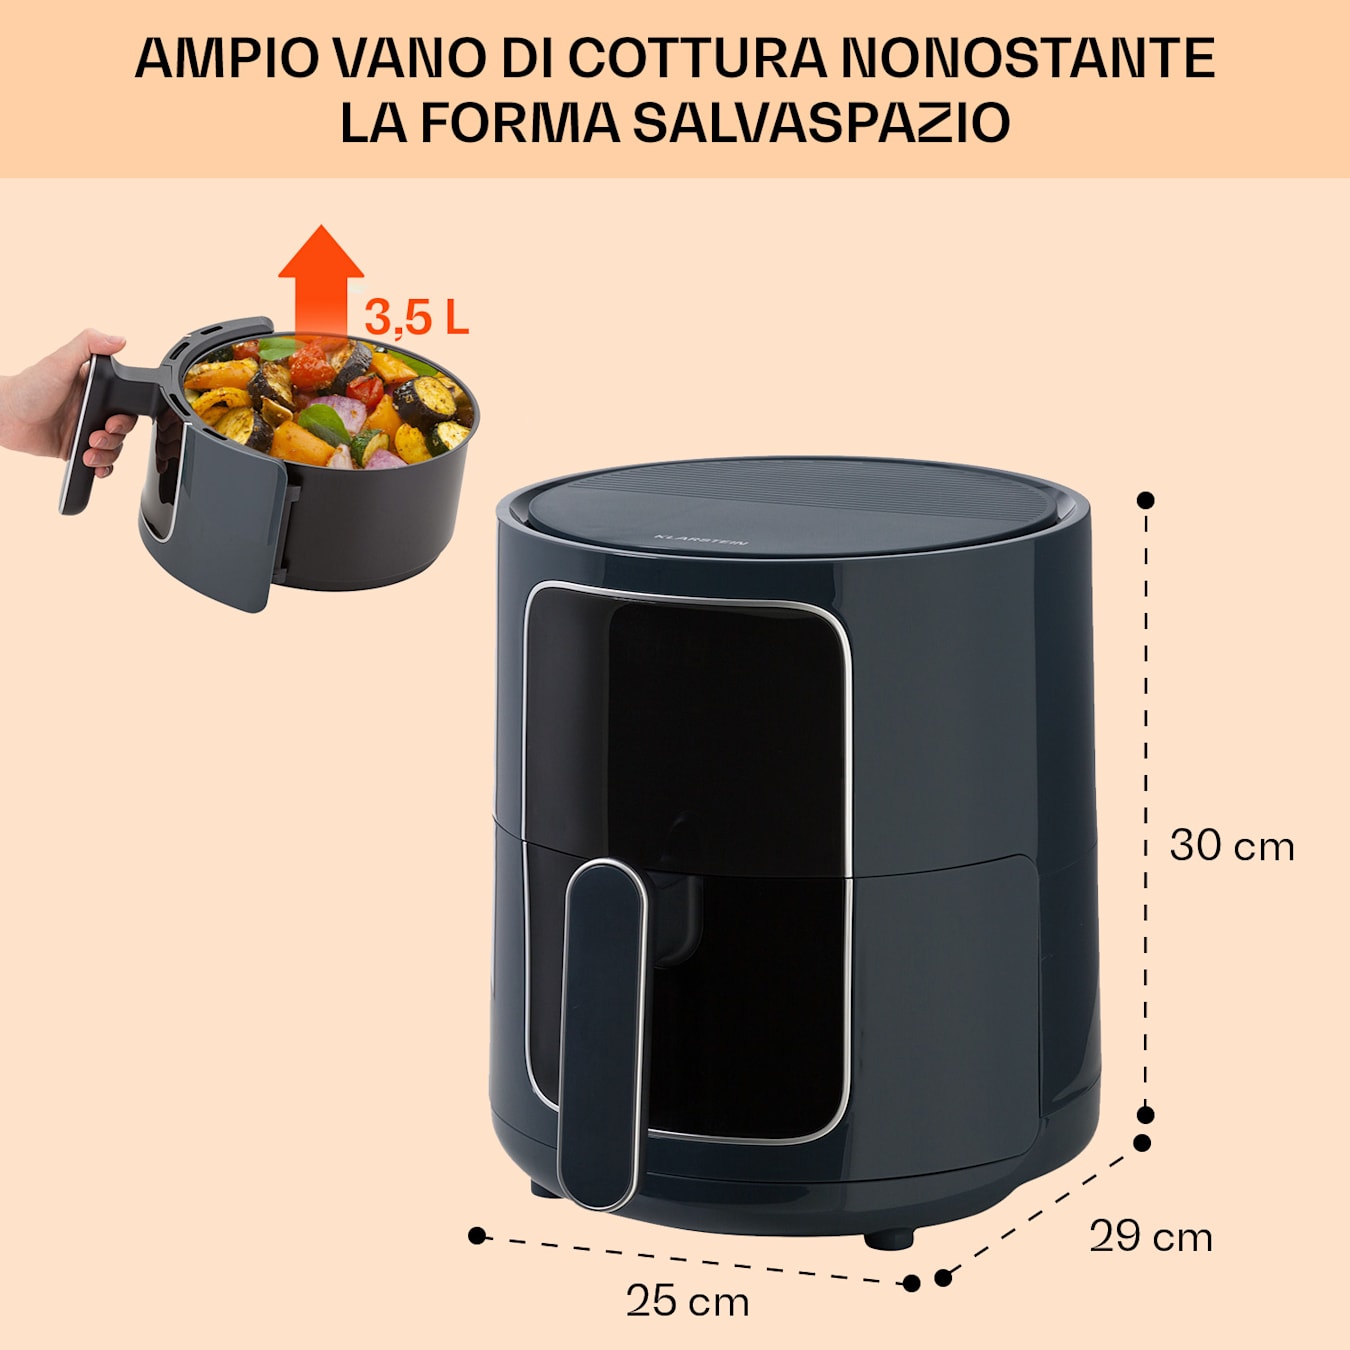 Crisp-Pro friggitrice ad aria calda Air Fryer 1400W, 2,8 litri, 8  programmi, timer, acciaio inox